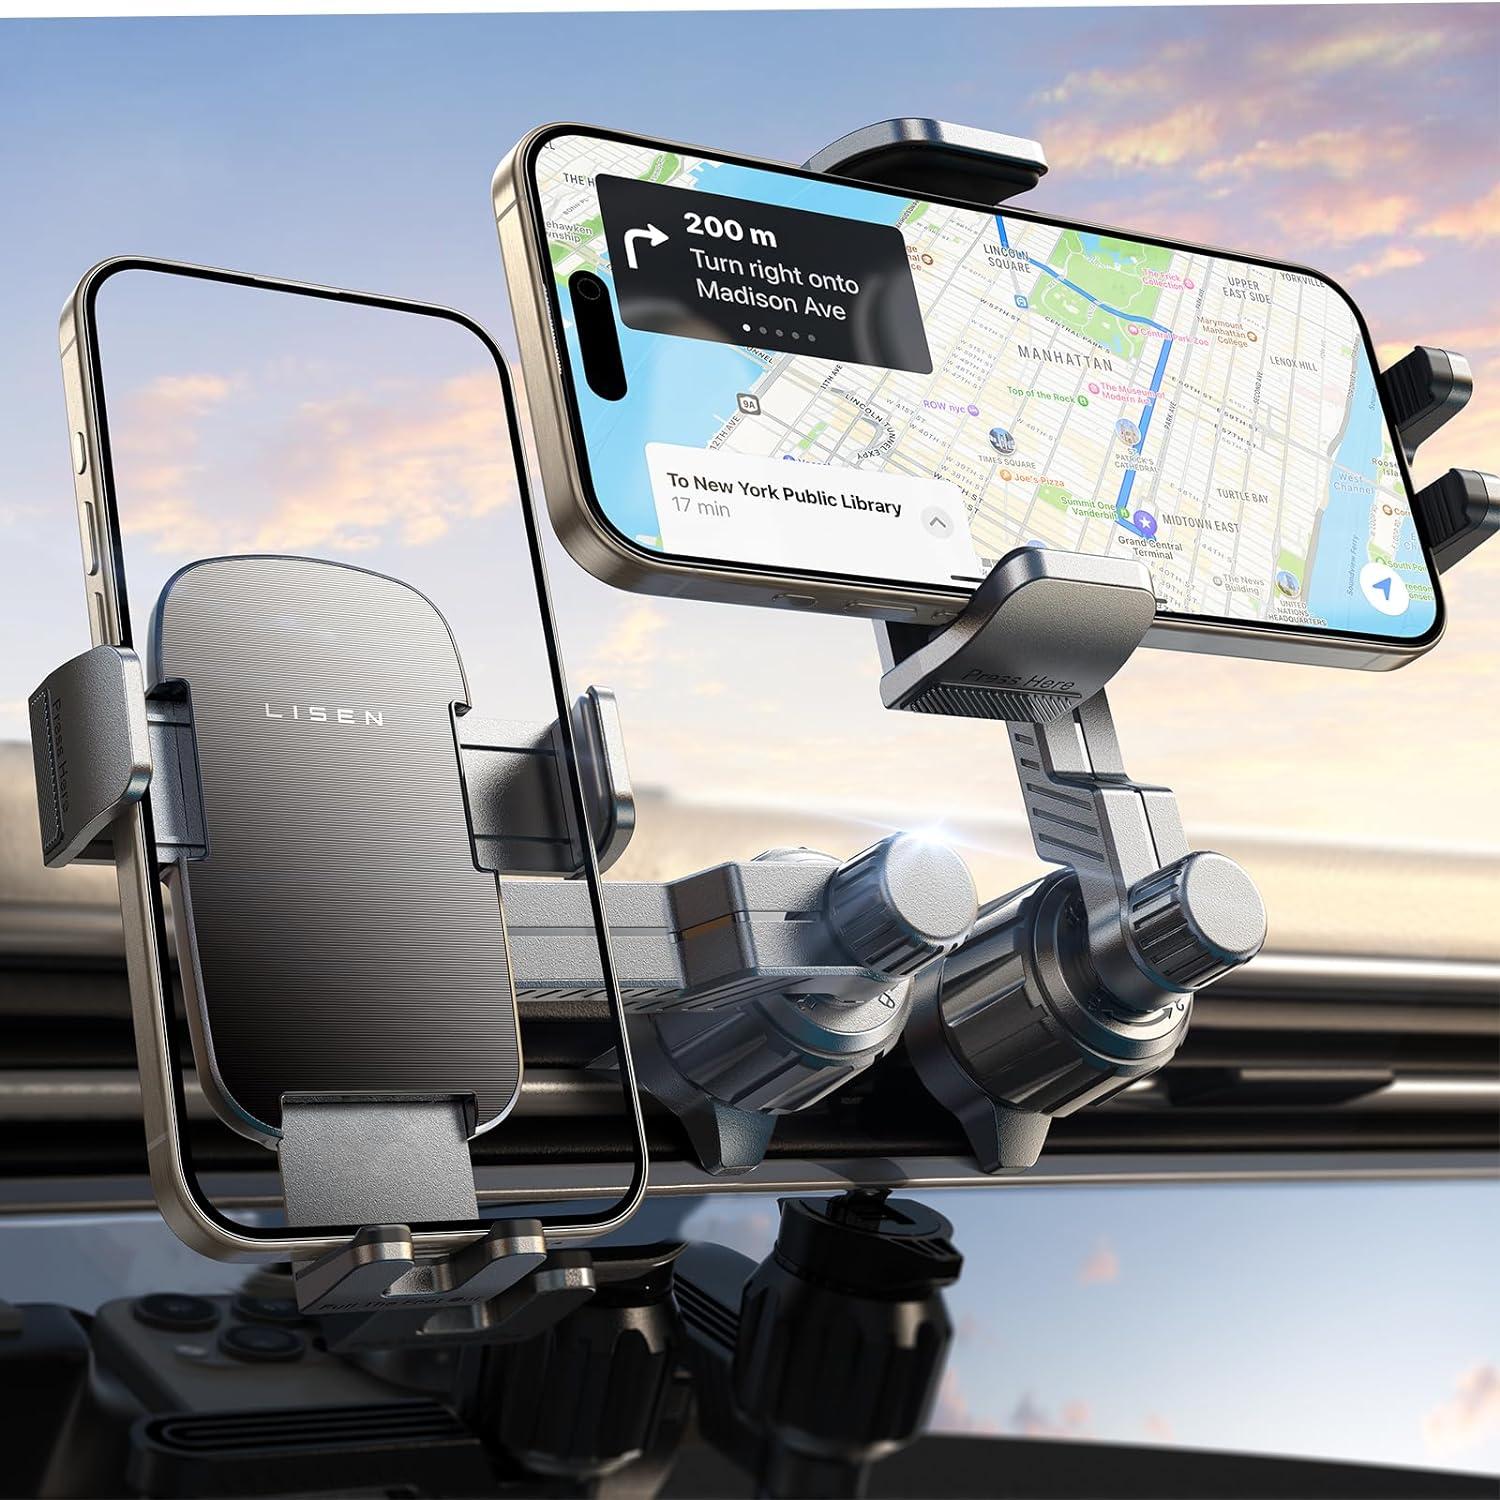 Lisen Universal Car Vent Mounted Adjustable Phone Holder for $5.39